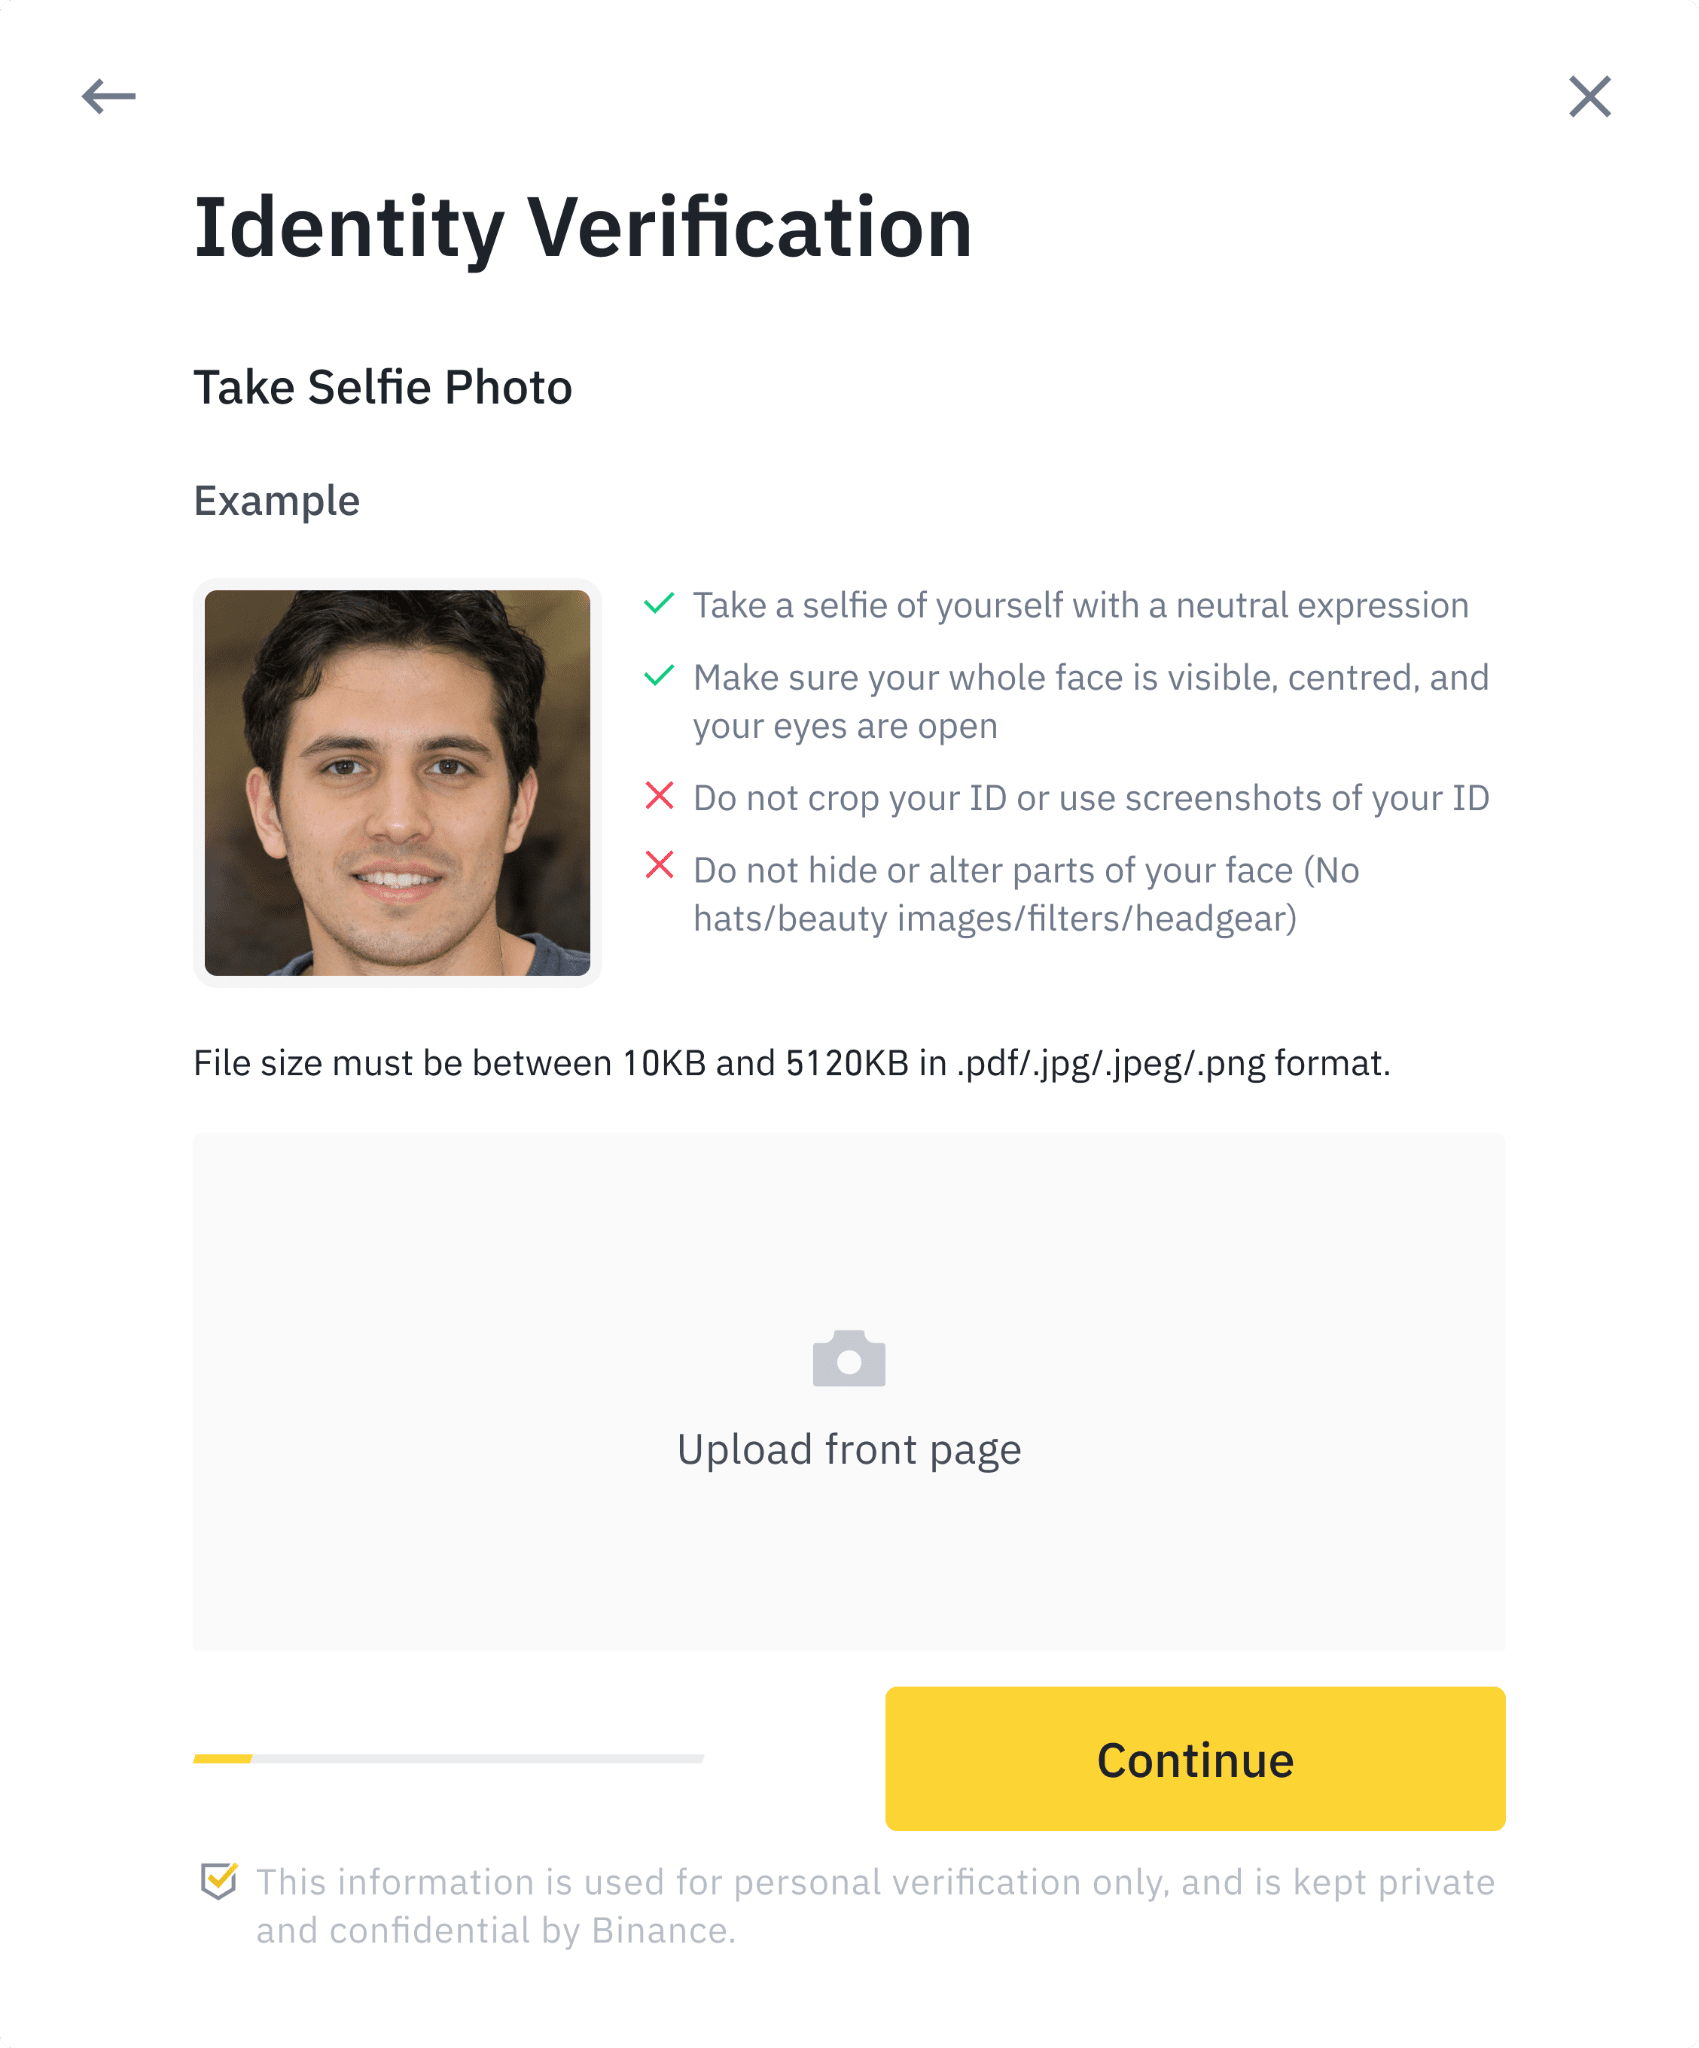 KYC Guide - Identity Verification on Binance